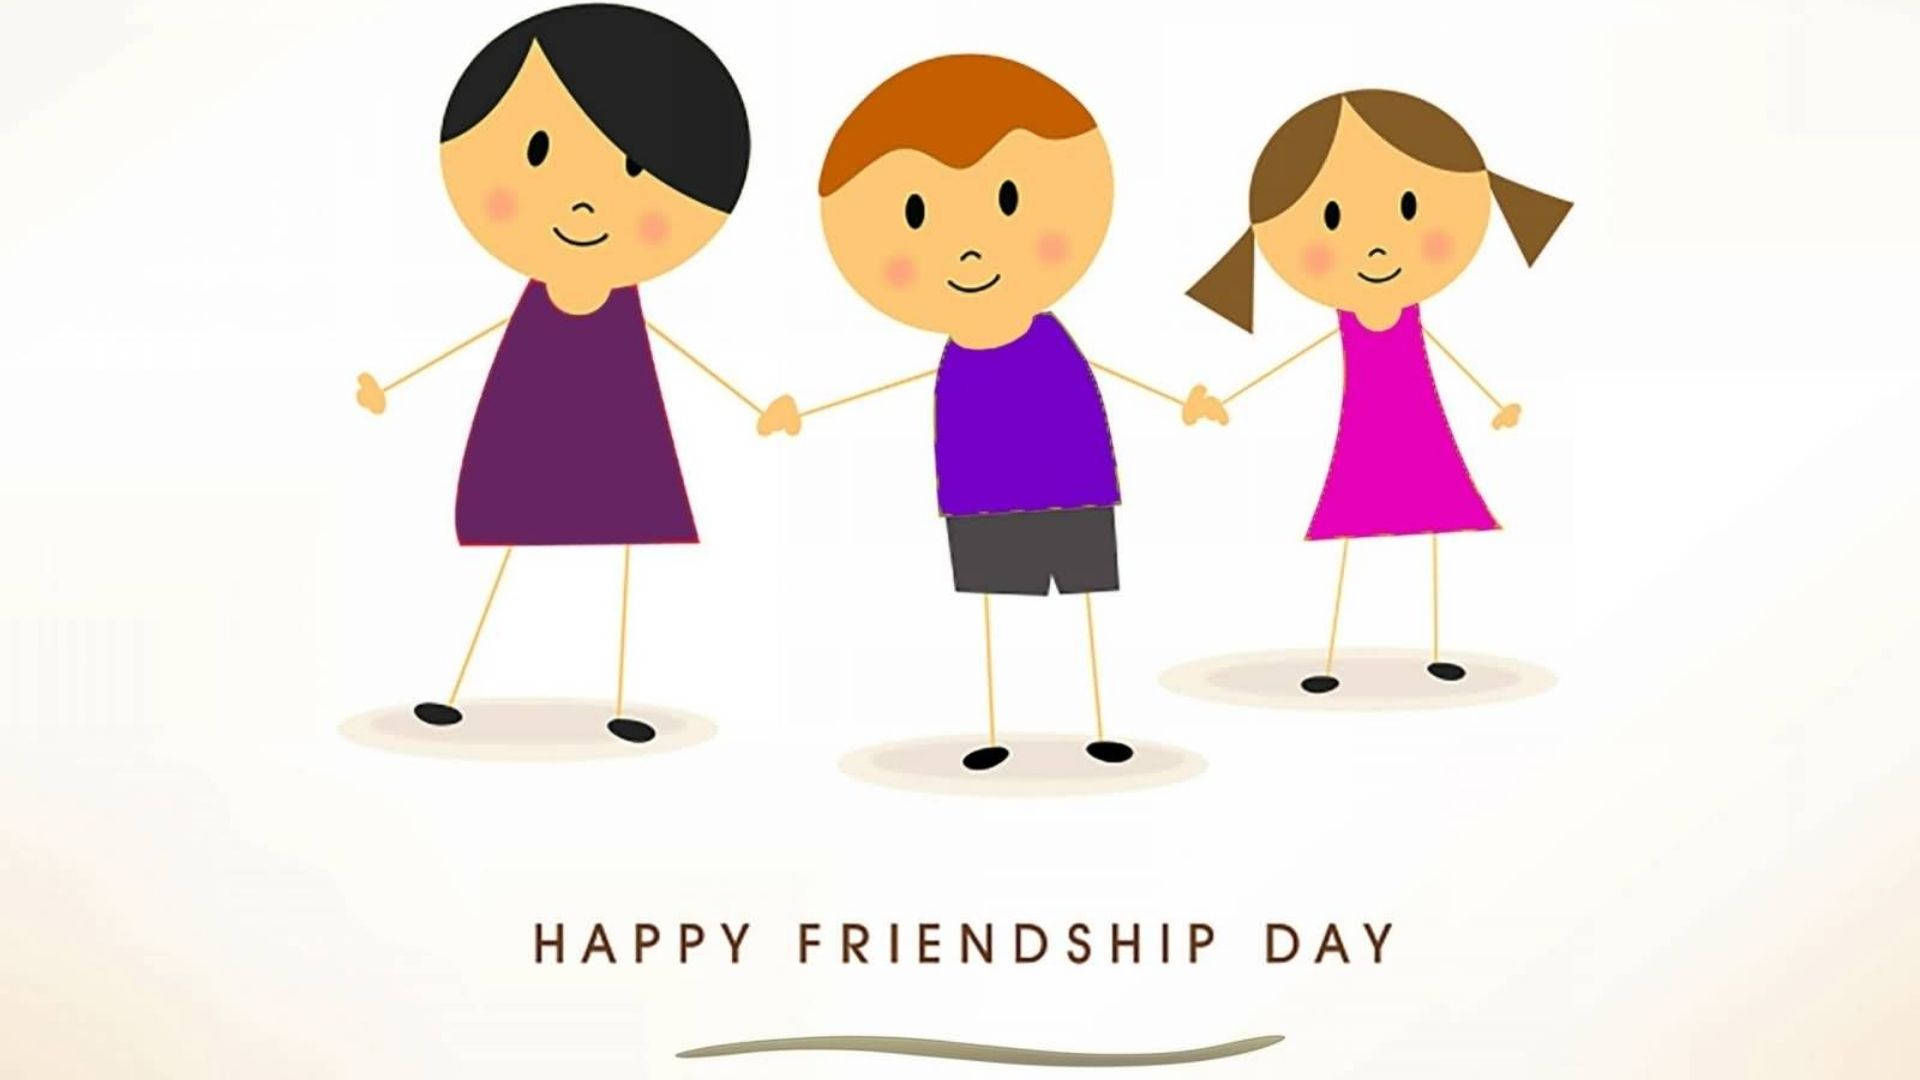 Hands Together On Friendship Day Background